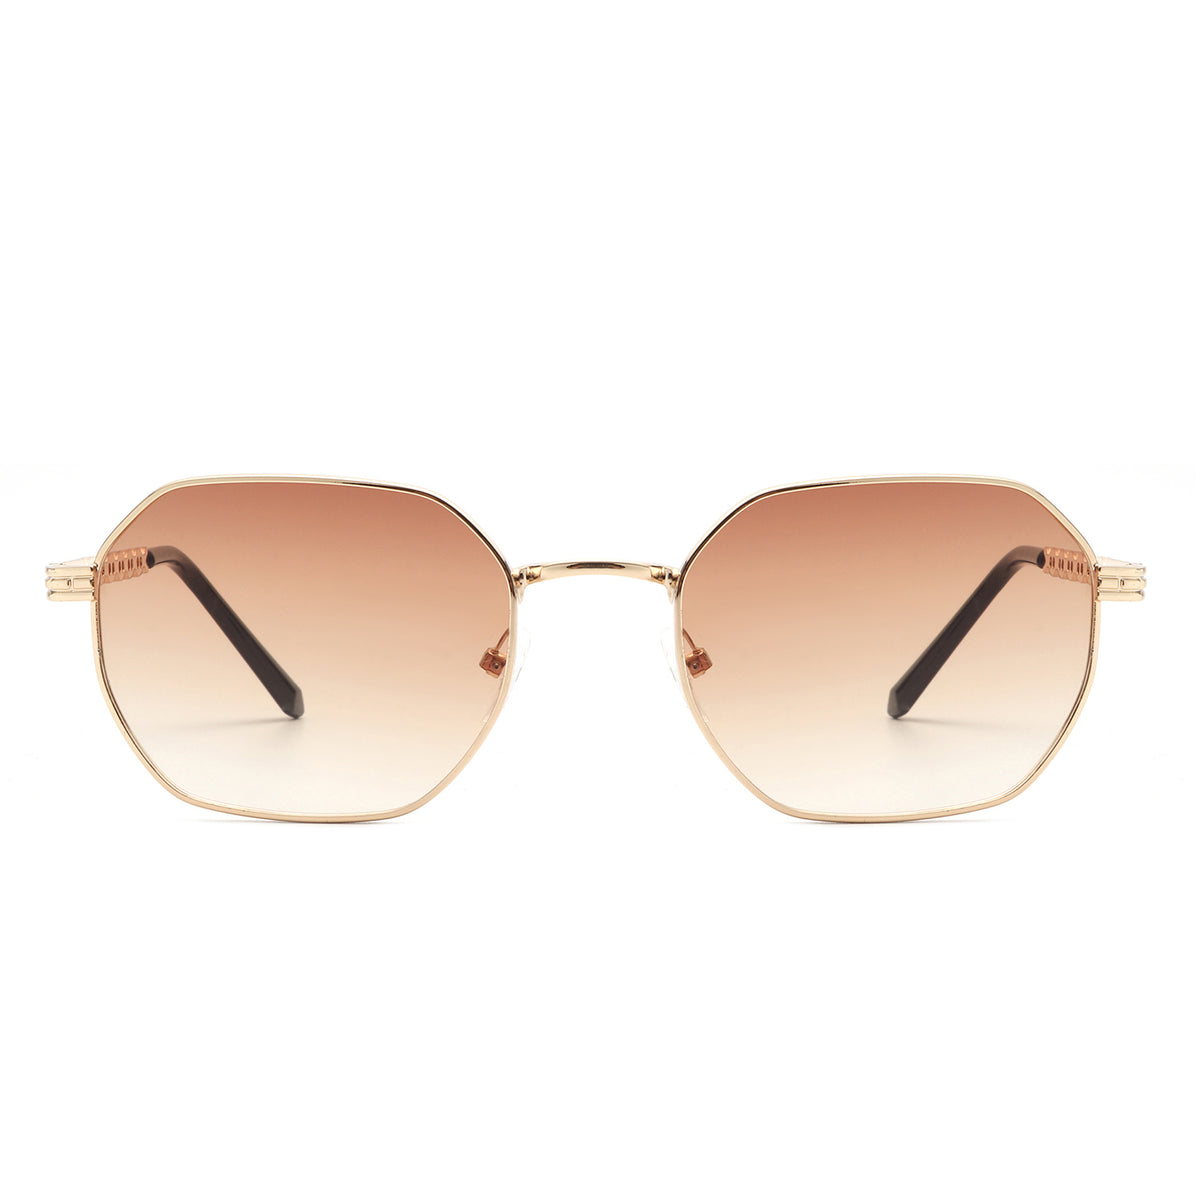 HJ2050 - Geometric Round Tinted Chain Link Design Wholesale Sunglasses